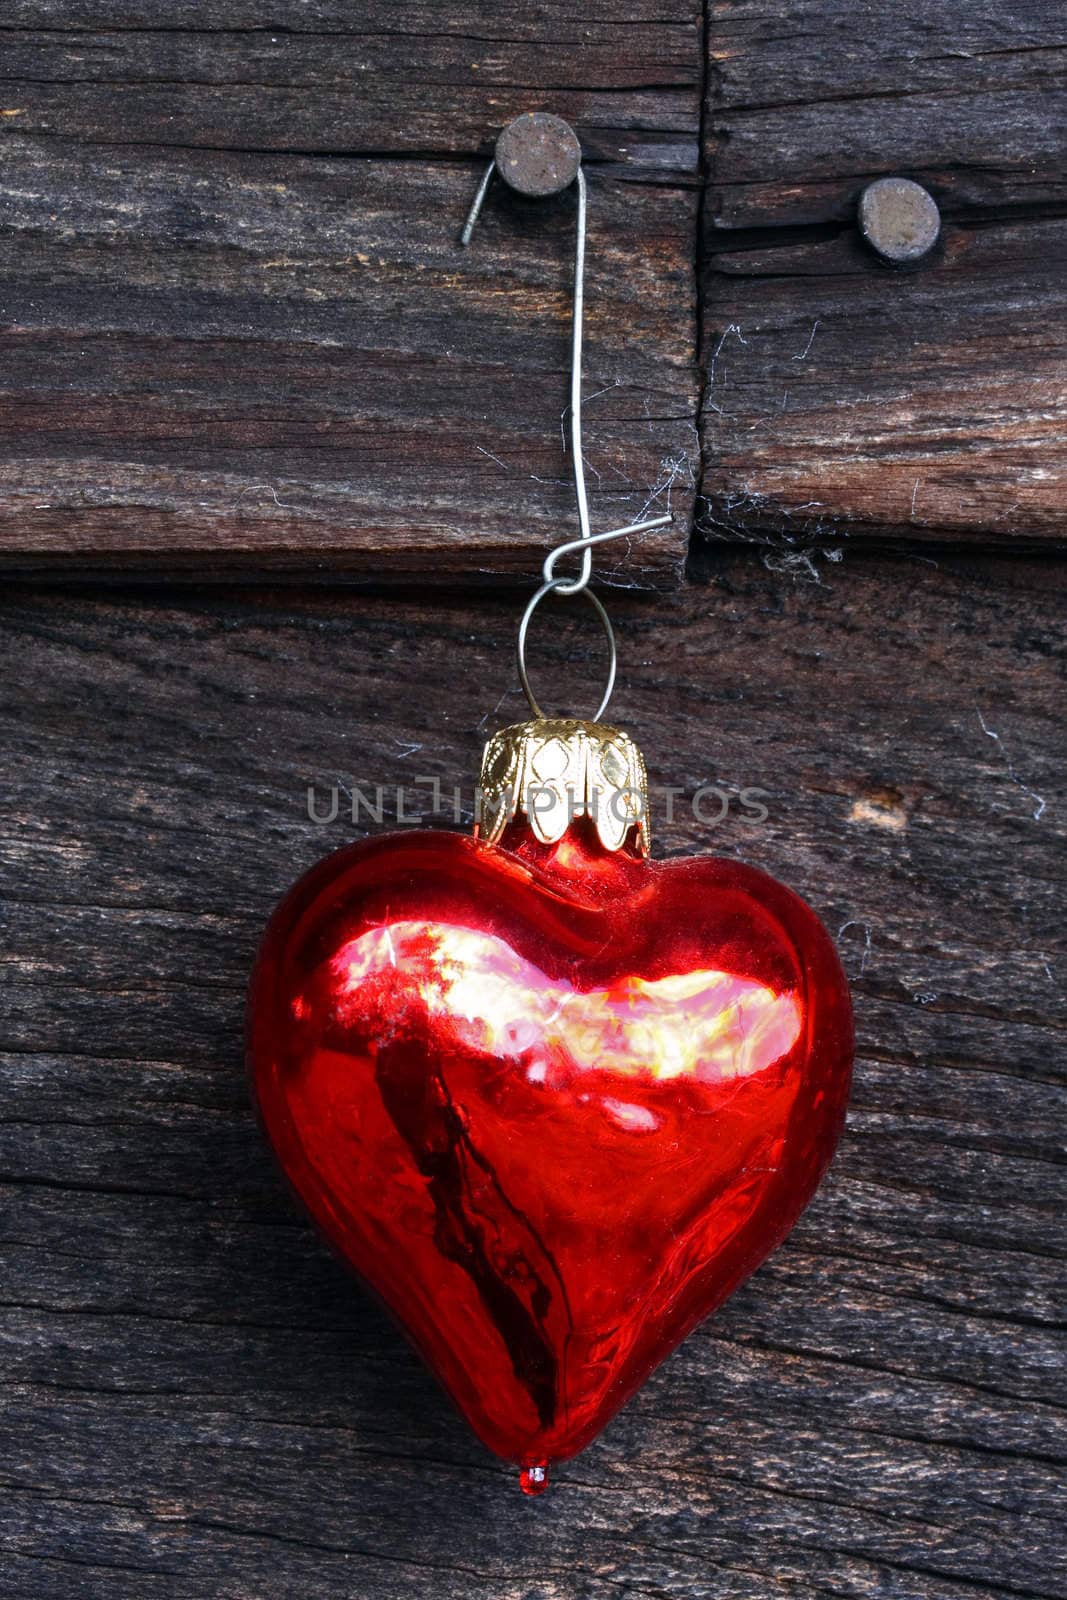 Heart Ornament on Wood by Geoarts